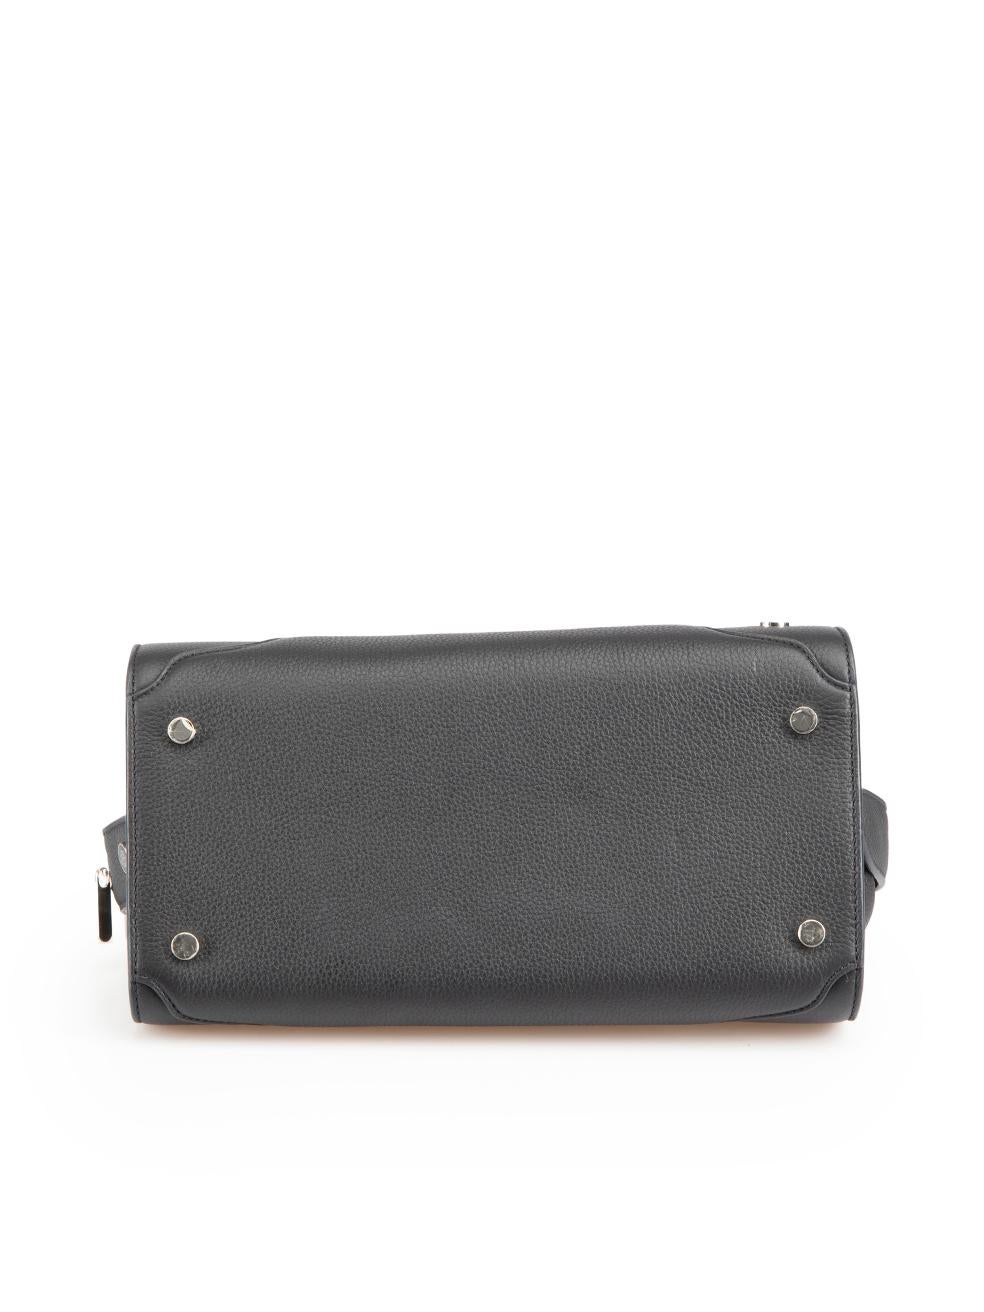 Women's Loro Piana Black Leather Micro Sesia Handbag